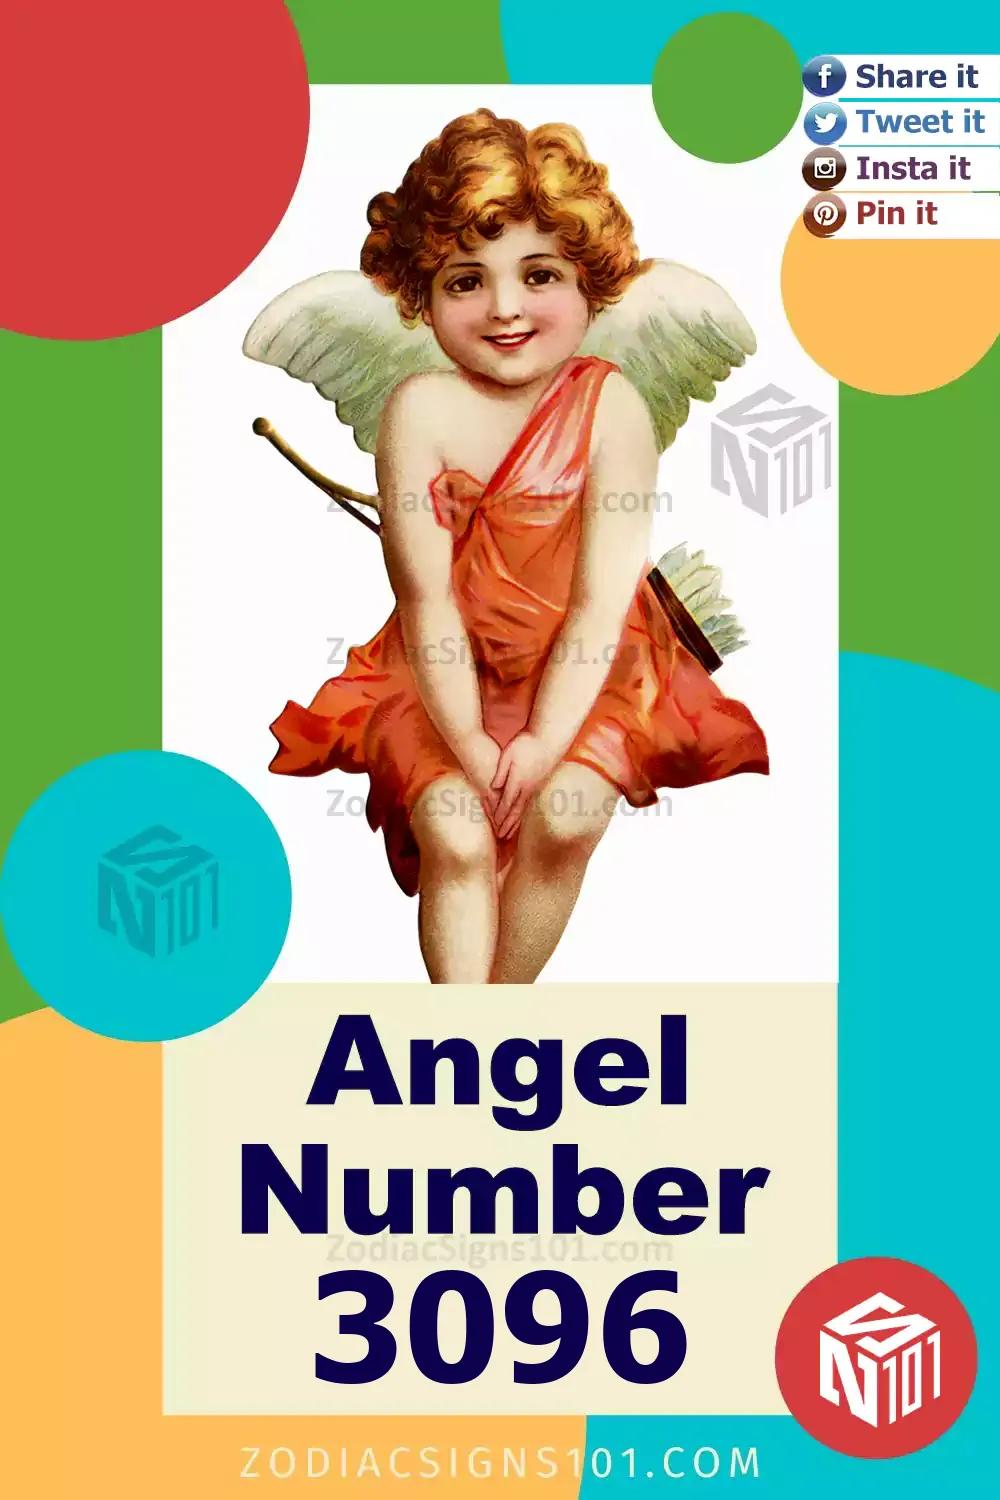 3096-Angel-Number-Meaning.jpg